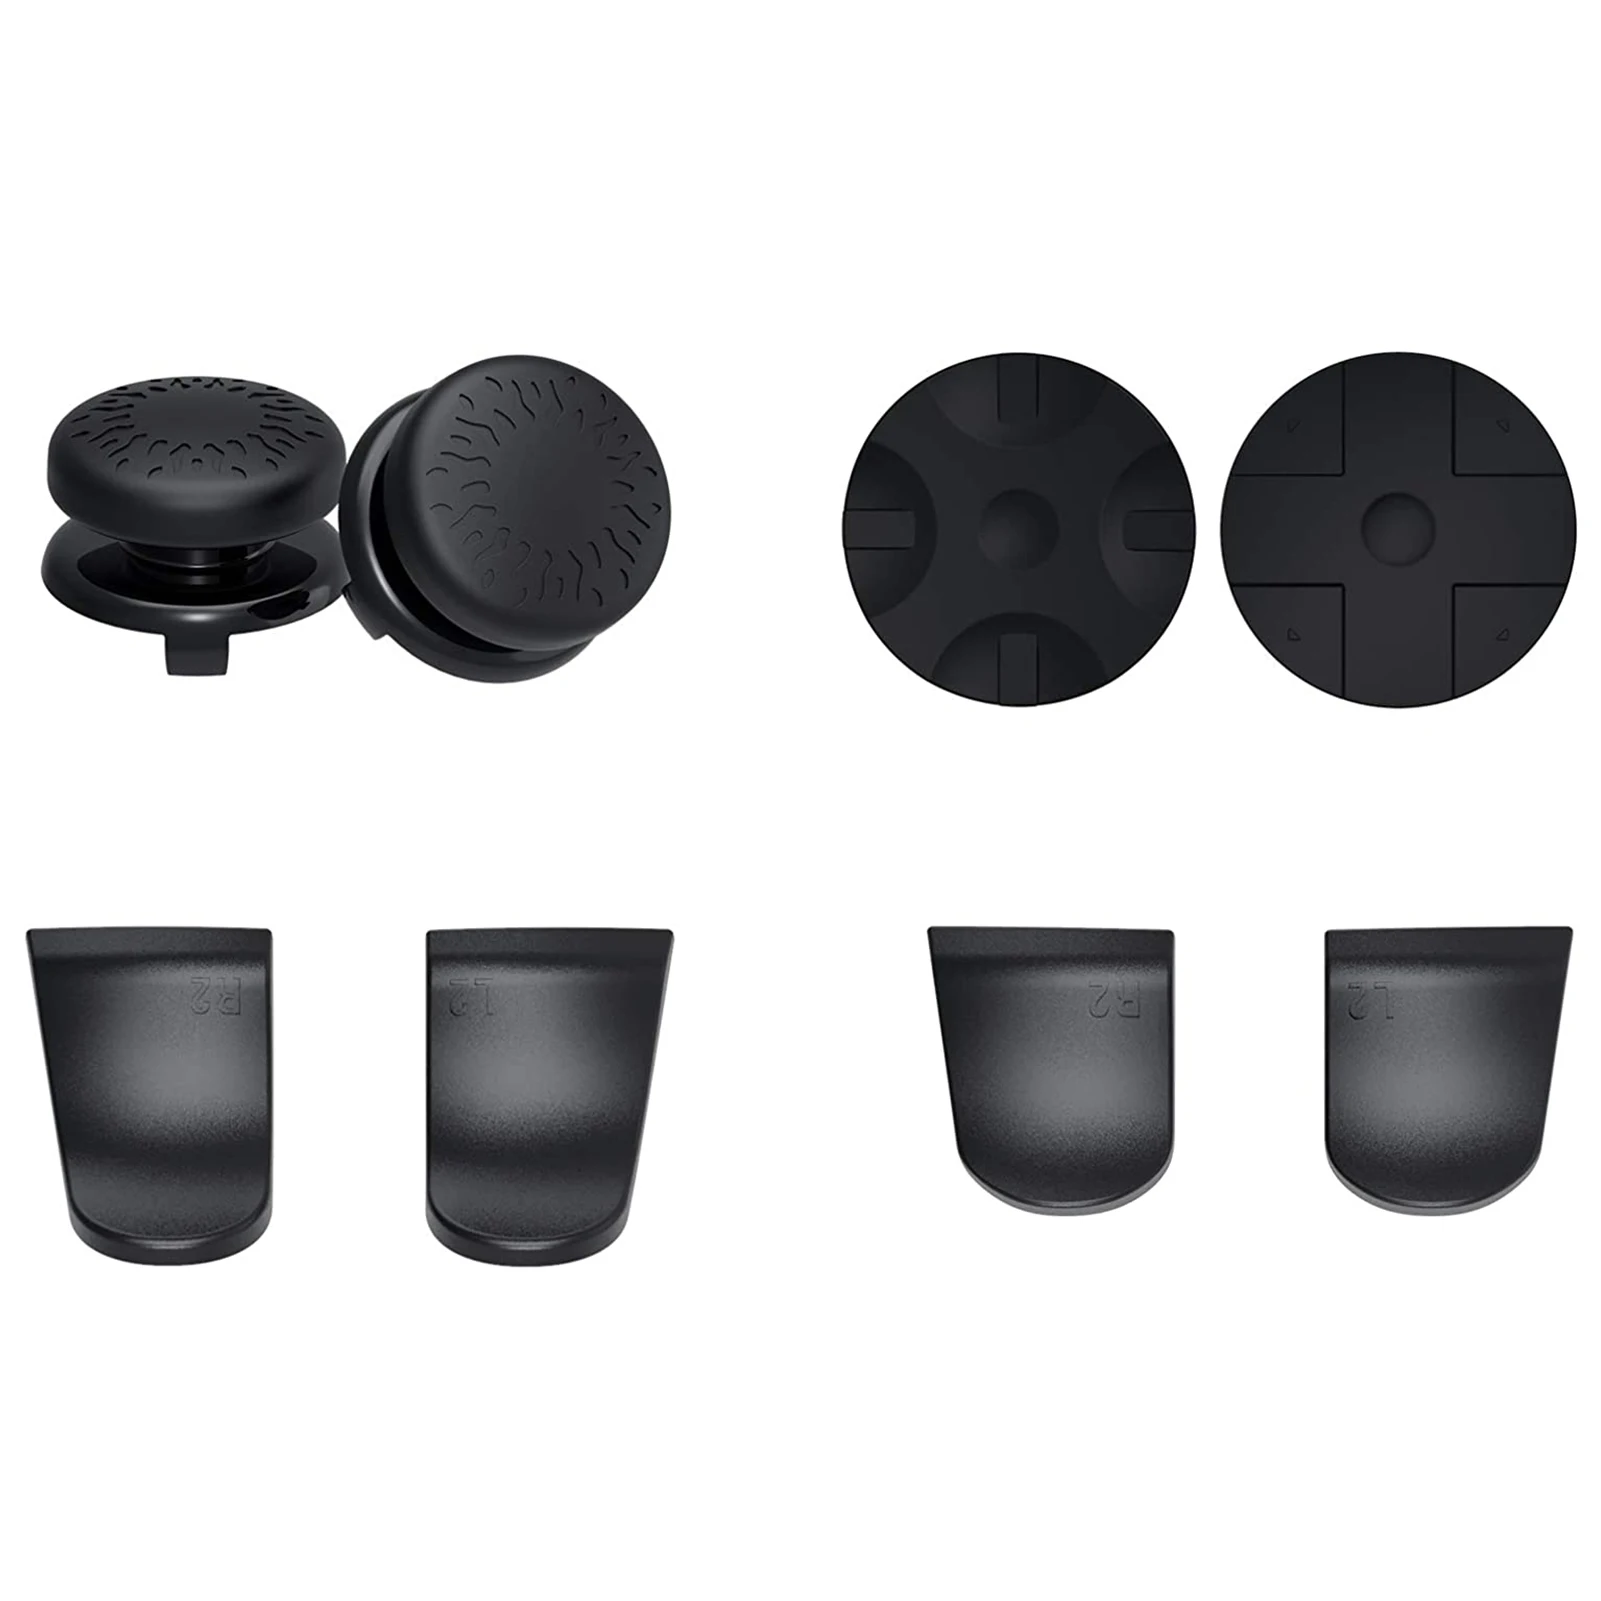 Accessories Kit Bundle for PS5 DualSense Controller, MENEEA Thumb